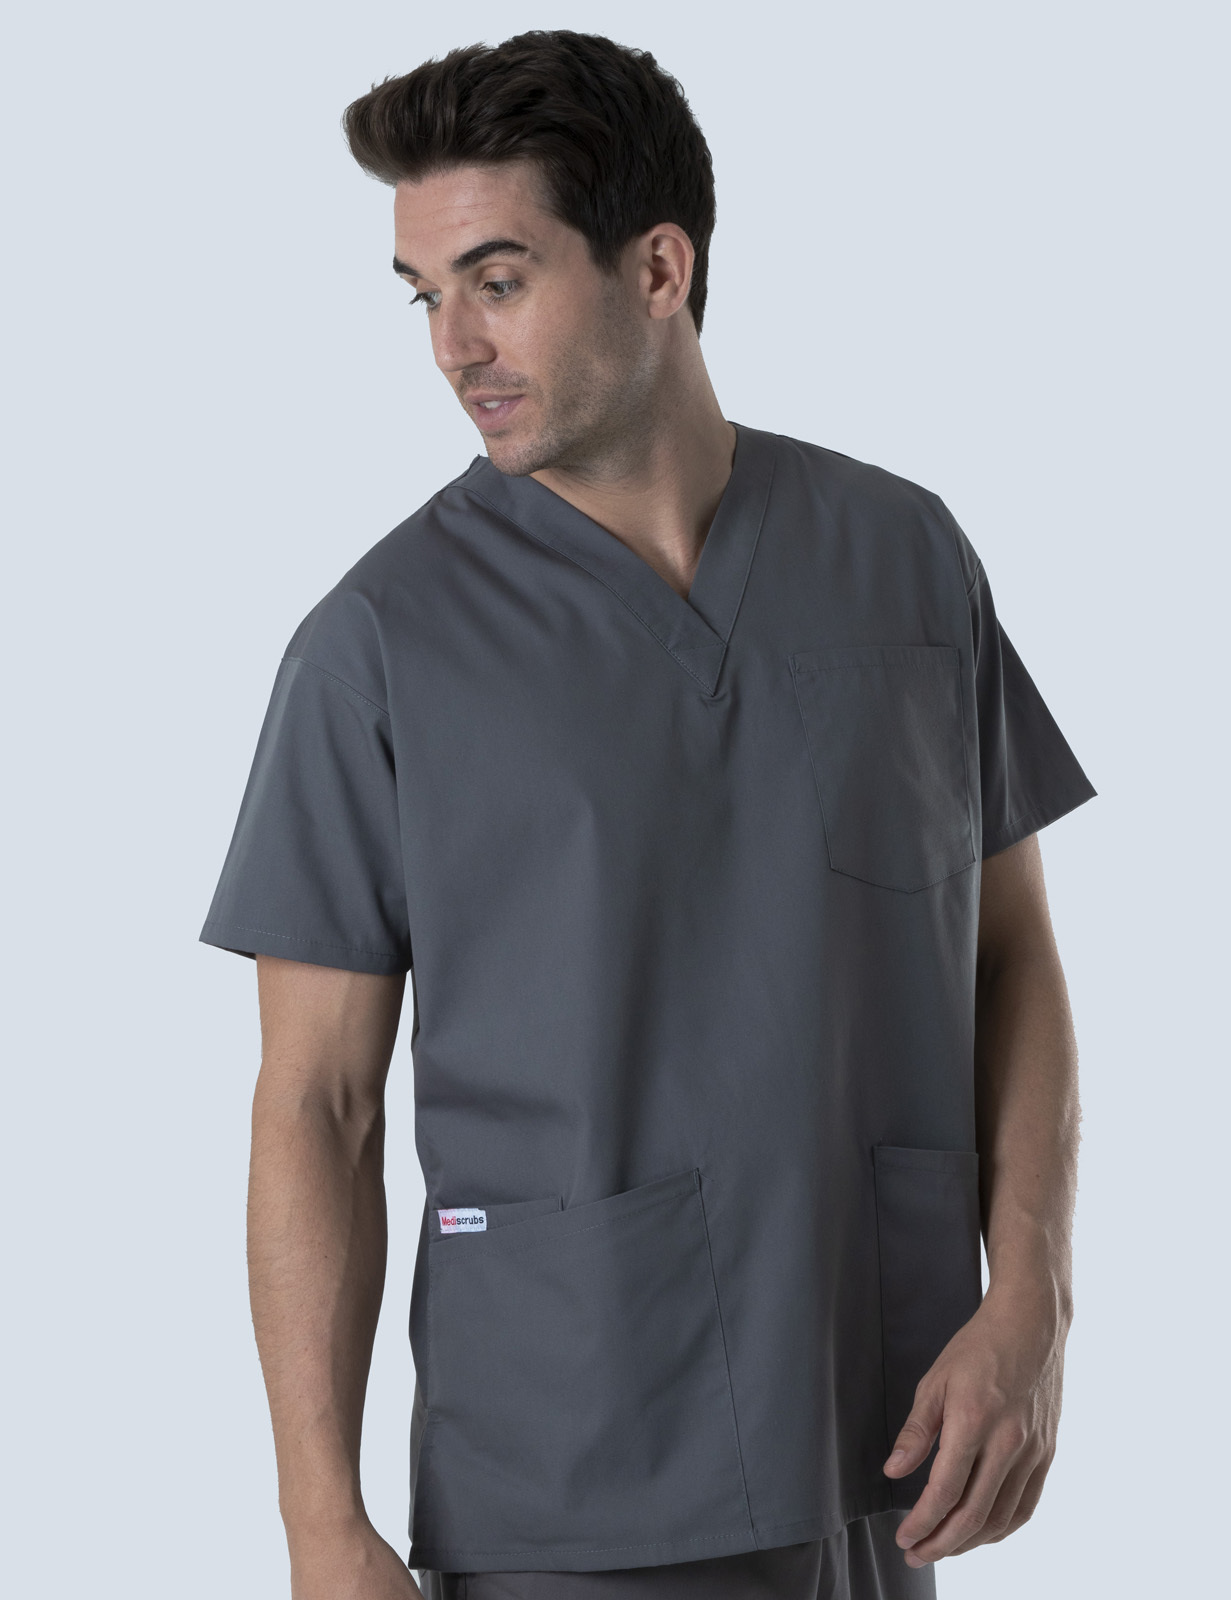 Royal Hobart Hospital - Emergency Doctor (4 Pocket Scrub Top and Cargo Pants in Steel Grey incl Logos)